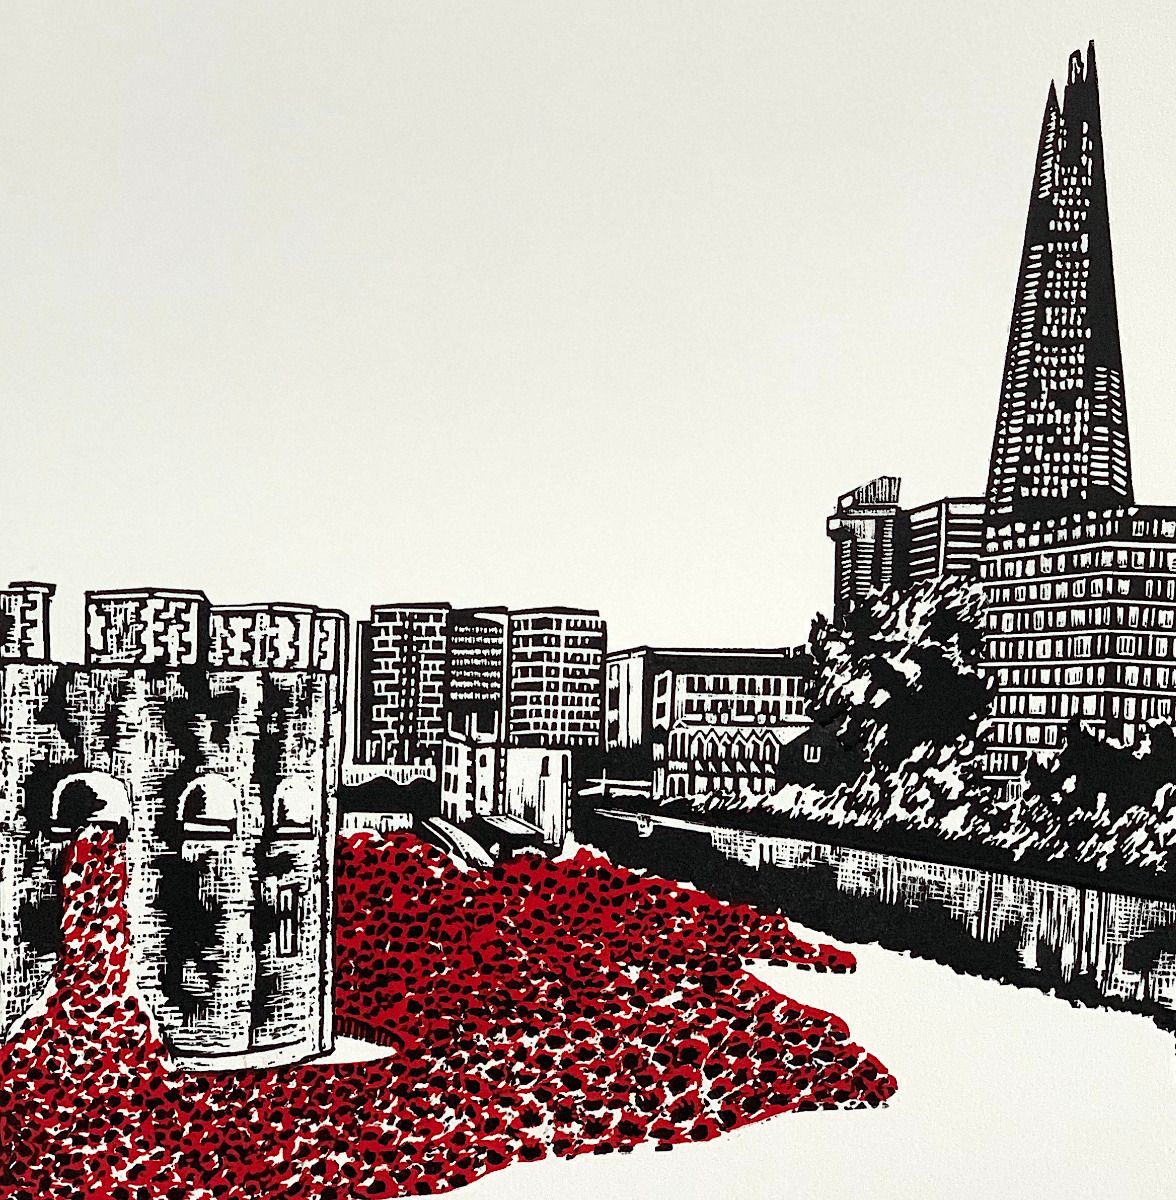 Tower of London - Red Sea Variation by Jennifer Jokhoo